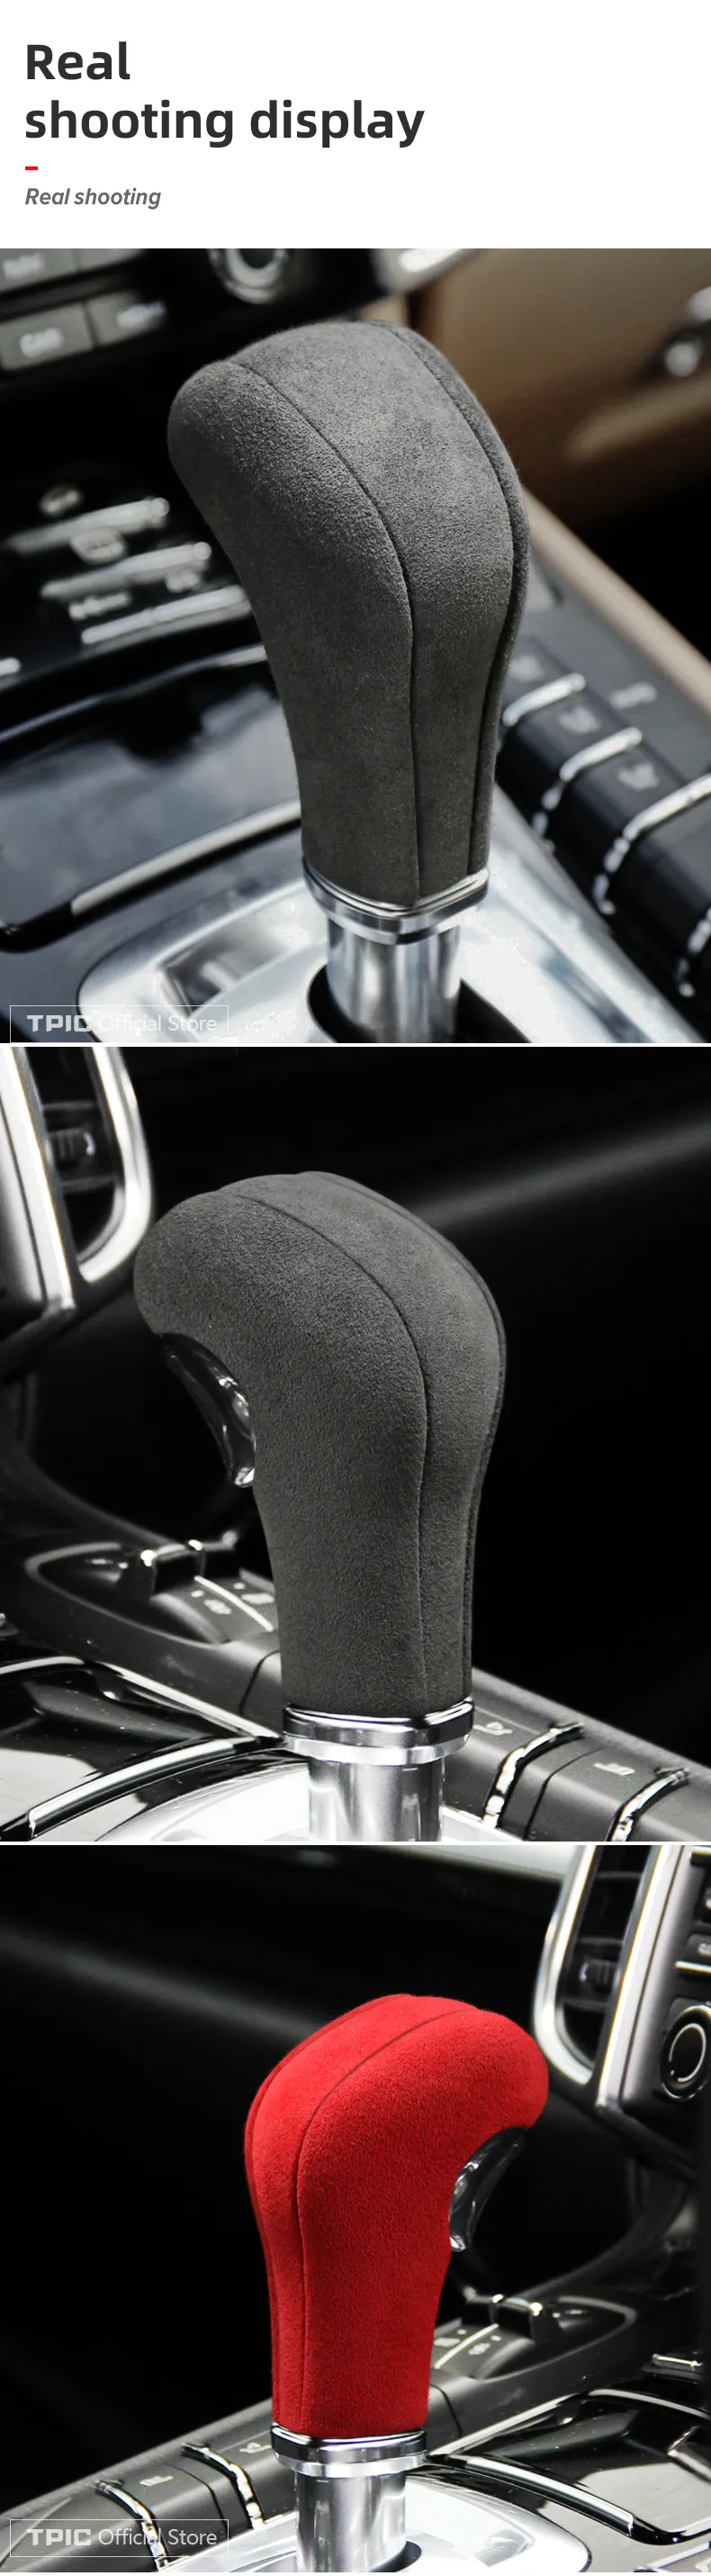 Alcantara Leather Gear Shift Knob Cover Trim Decals For Porsche Cayenne  2011 2017 Nissan Qashqai Interior Accessories From Biaoq3, $45.23